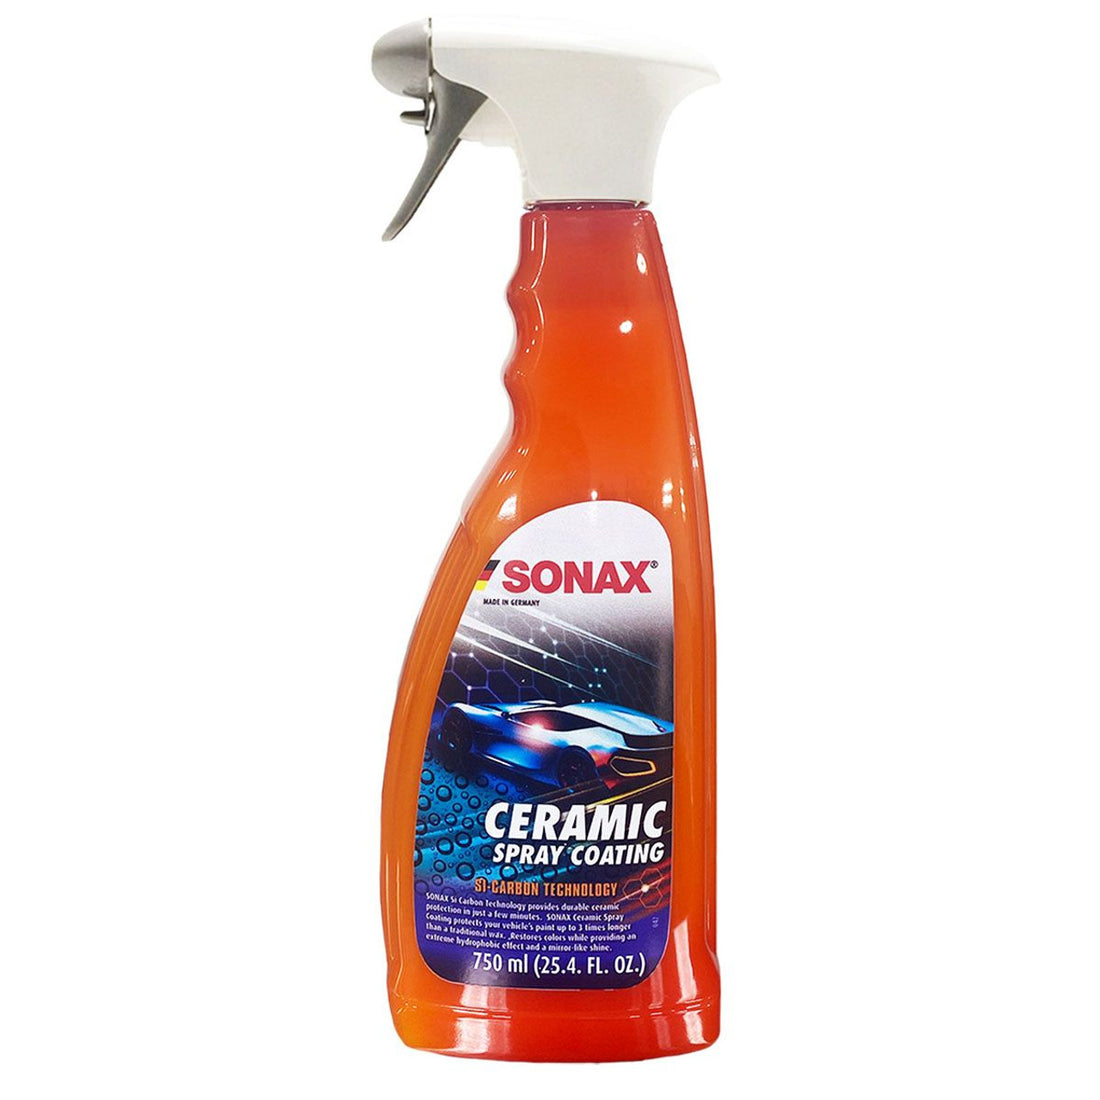 SONAX Ceramic Spray Coating 750ml..